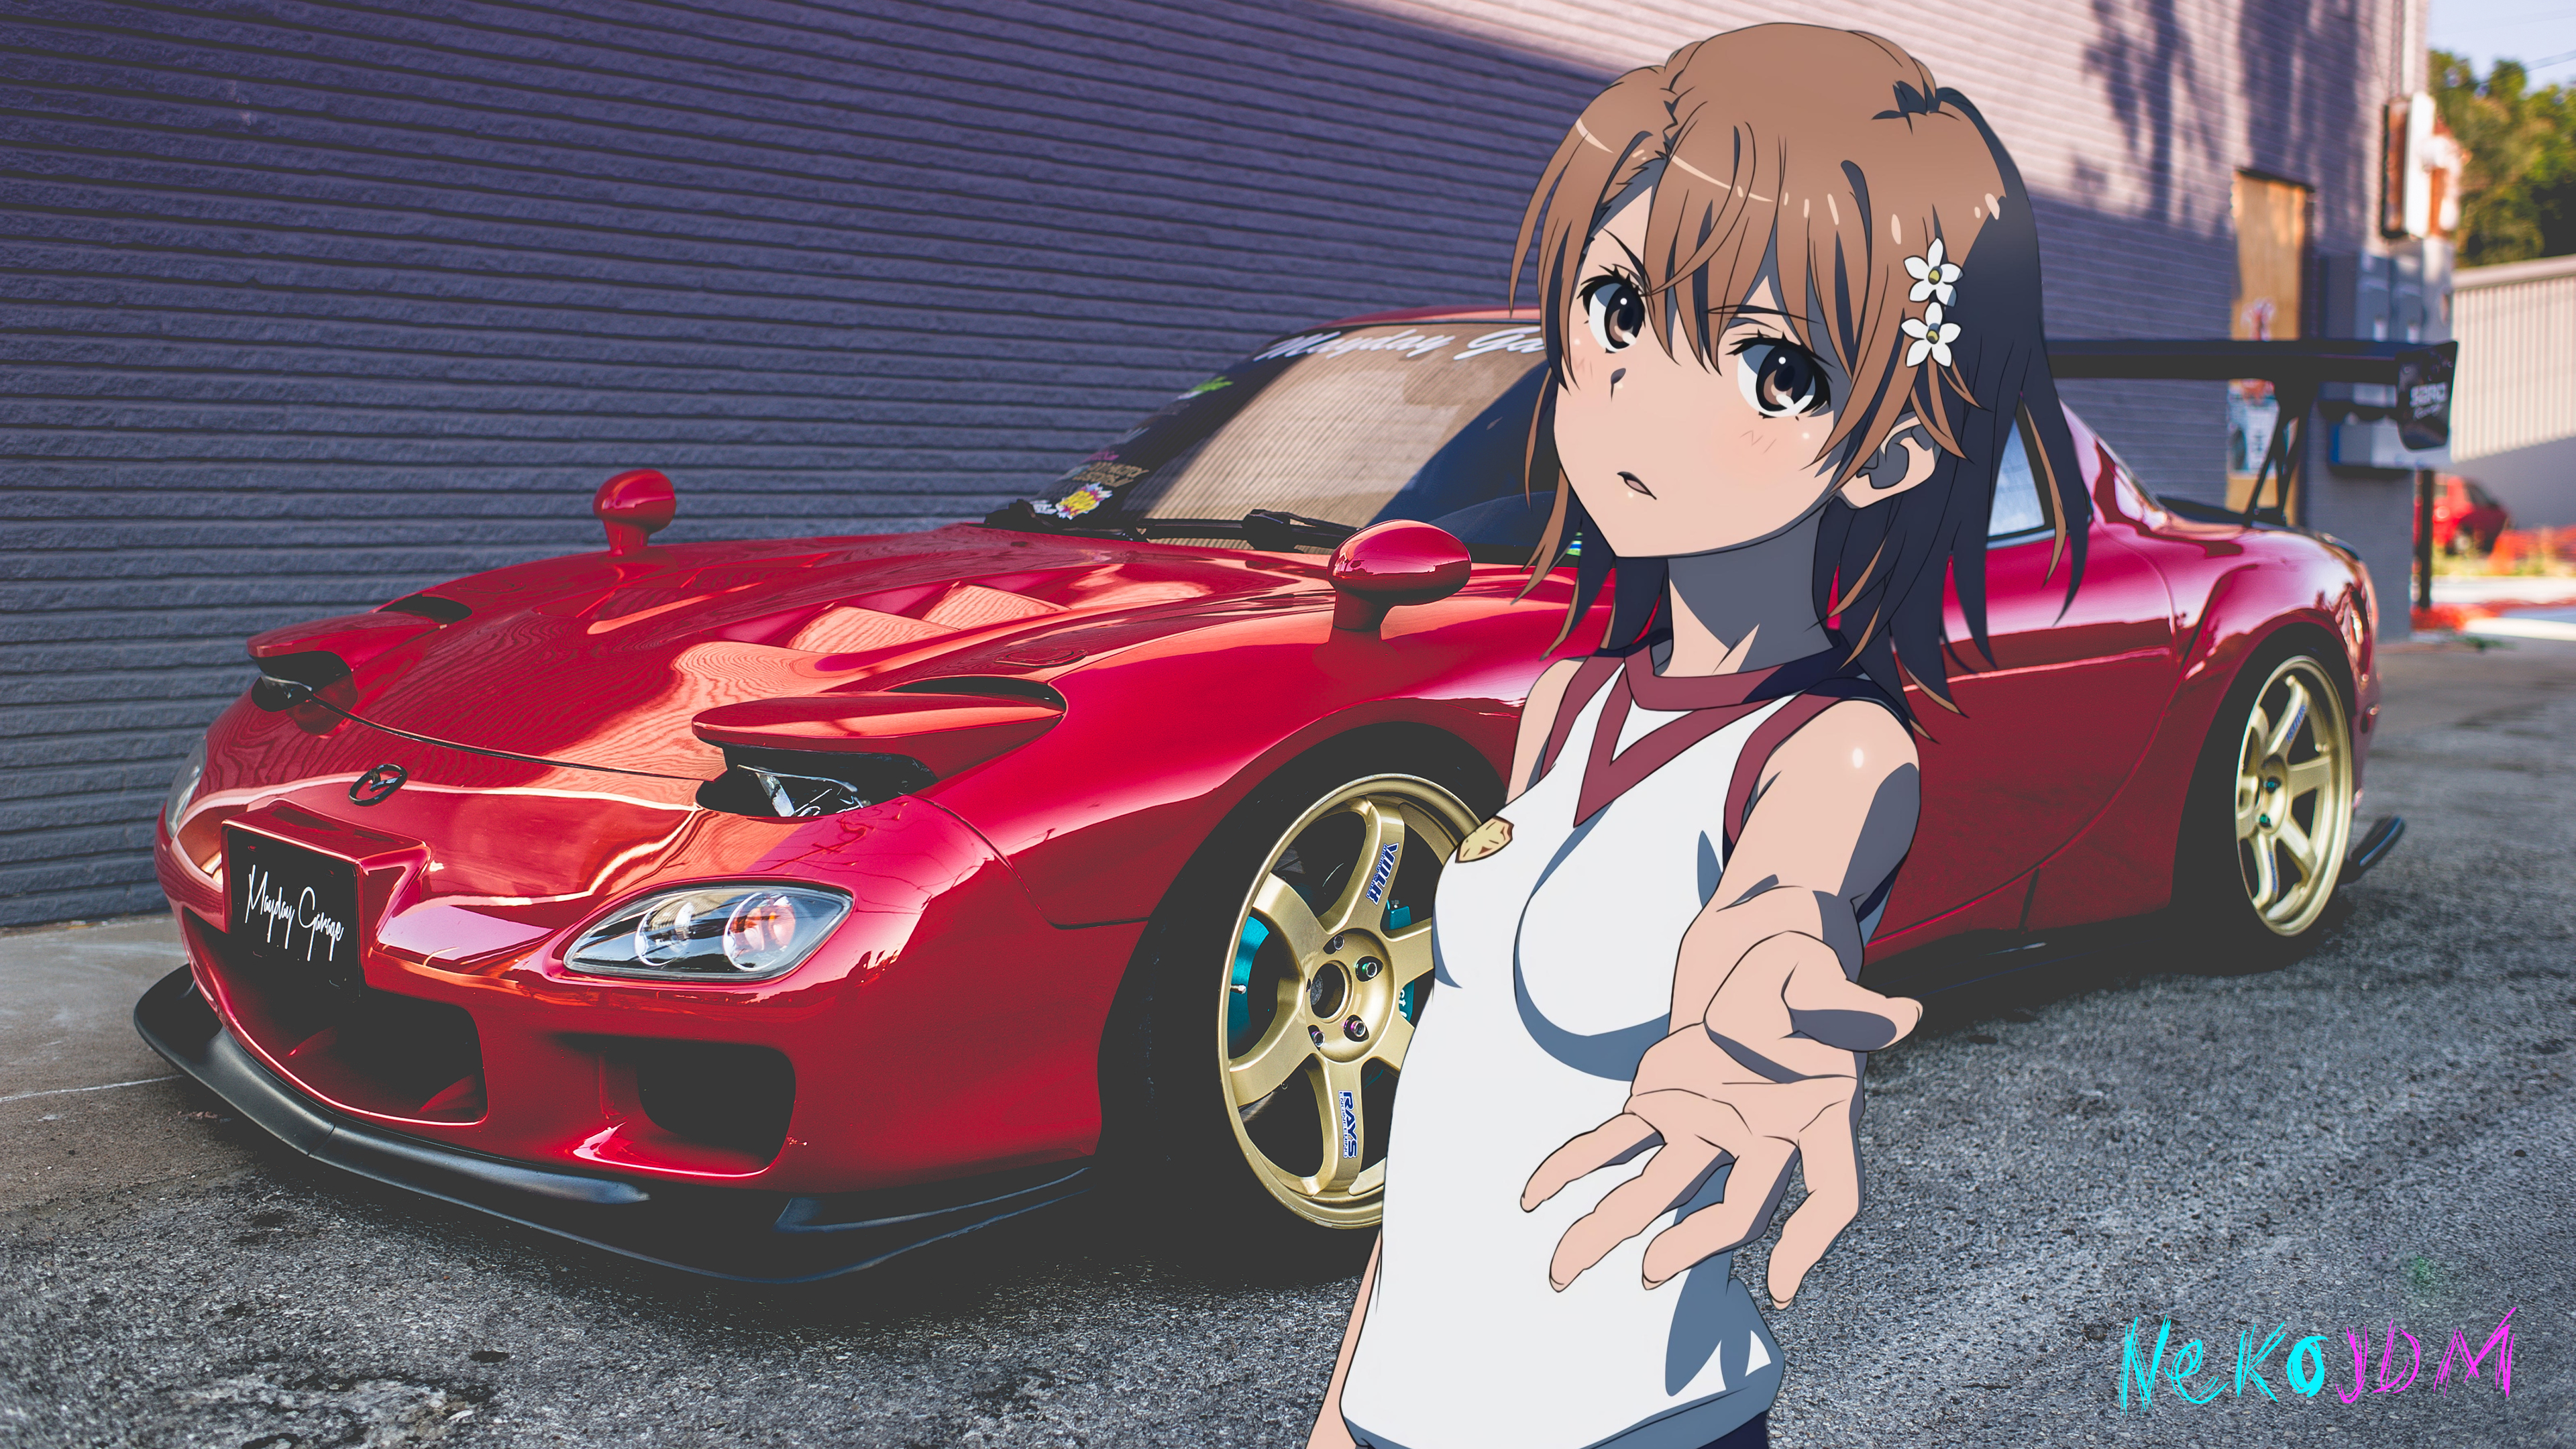 5in1 Sponsors Pack Door Keisuke Takahashi Ryosuke Highway Star Max Speed  SHIFT DOWN PowerMax Express JDM Anime Racing RX7 Sticker Decal | Jalapenos  Decals